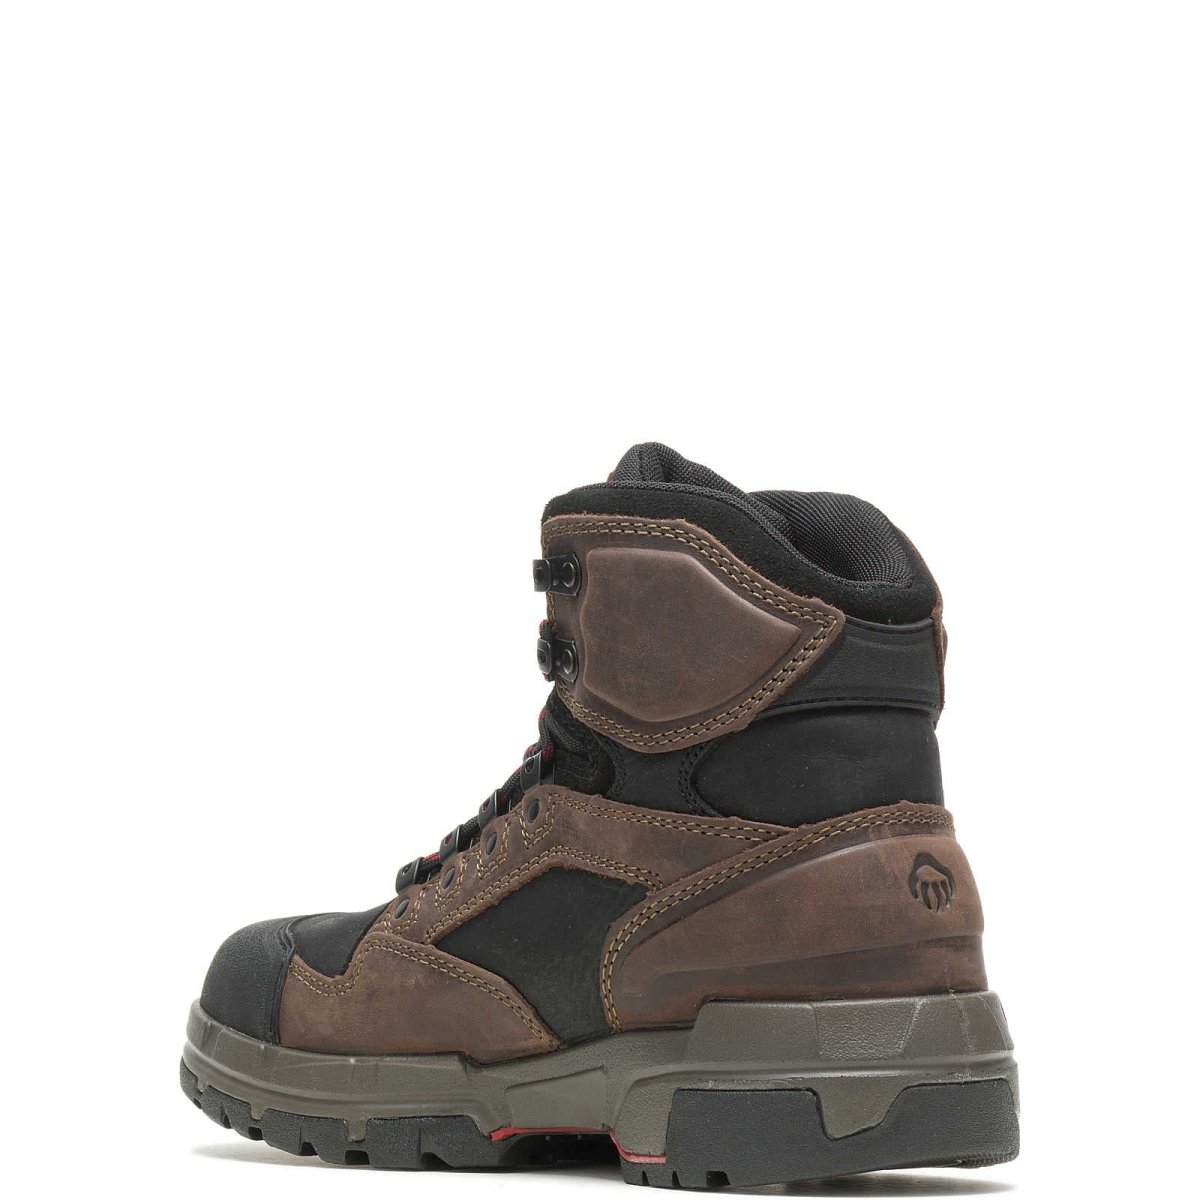 WOLVERINE LEGEND DURASHOCKS CARBONMAX 6" SAFETY TOE MEN'S WORK BOOT (W10612) IN DK BROWN - TLW Shoes